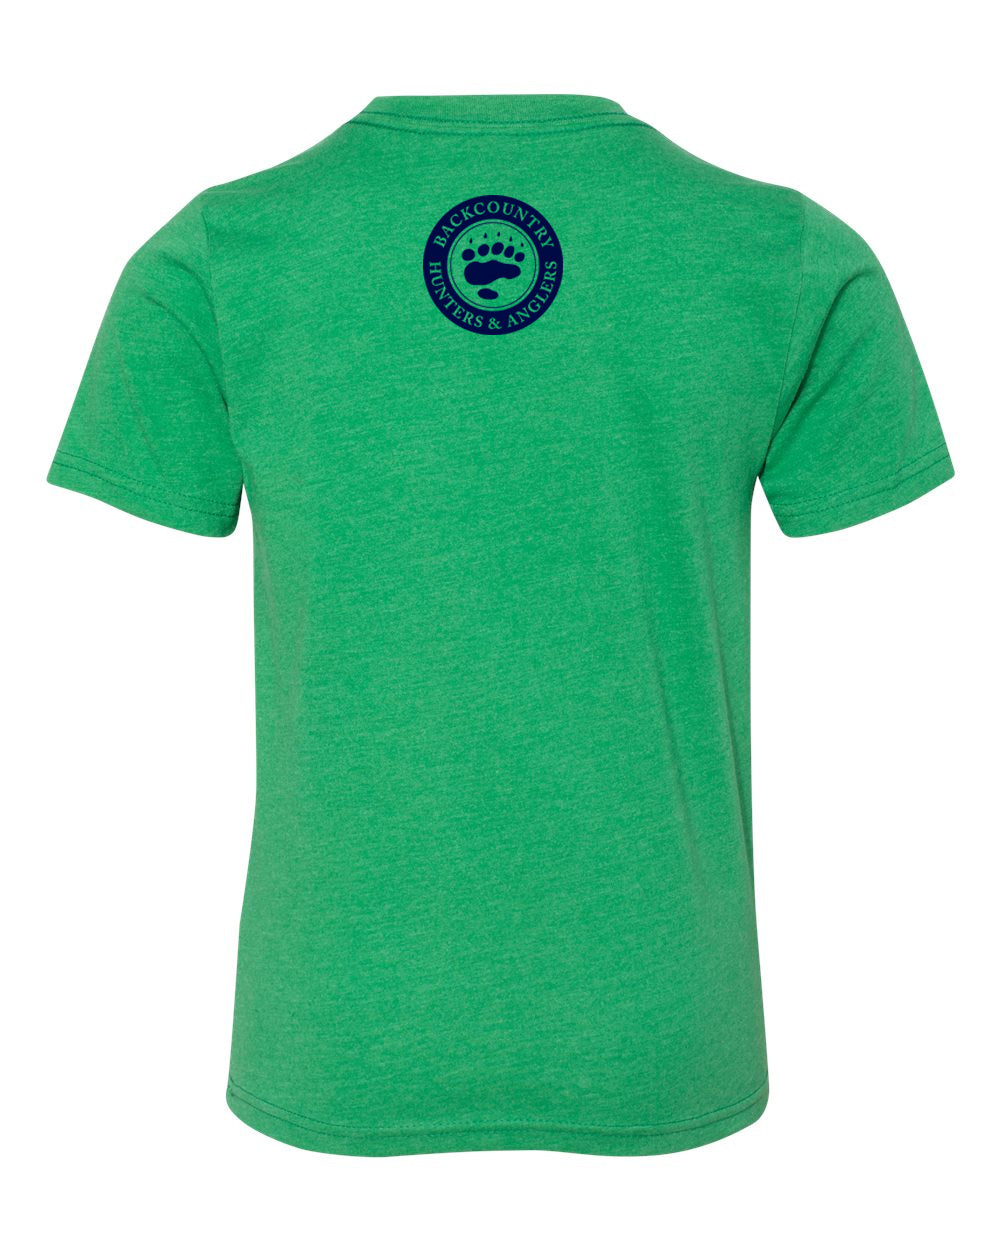 Youth Public Land Owner Shirt - Green/Logo